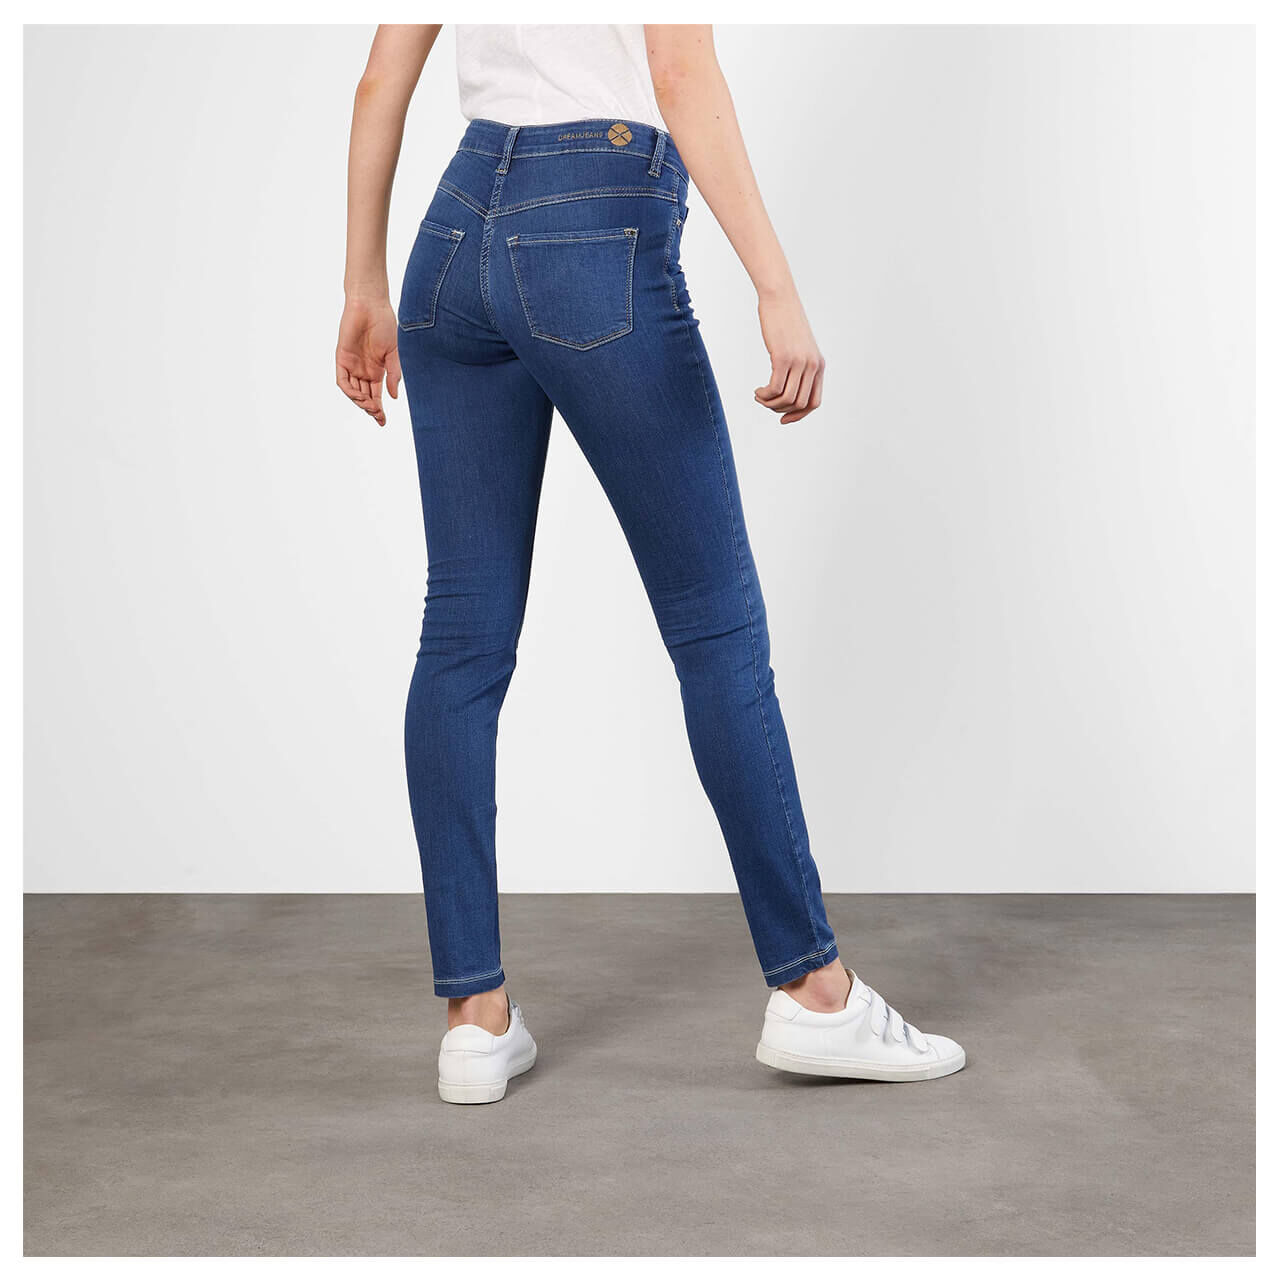 MAC Jeans Dream Skinny für Damen in Mittelblau, FarbNr.: D569